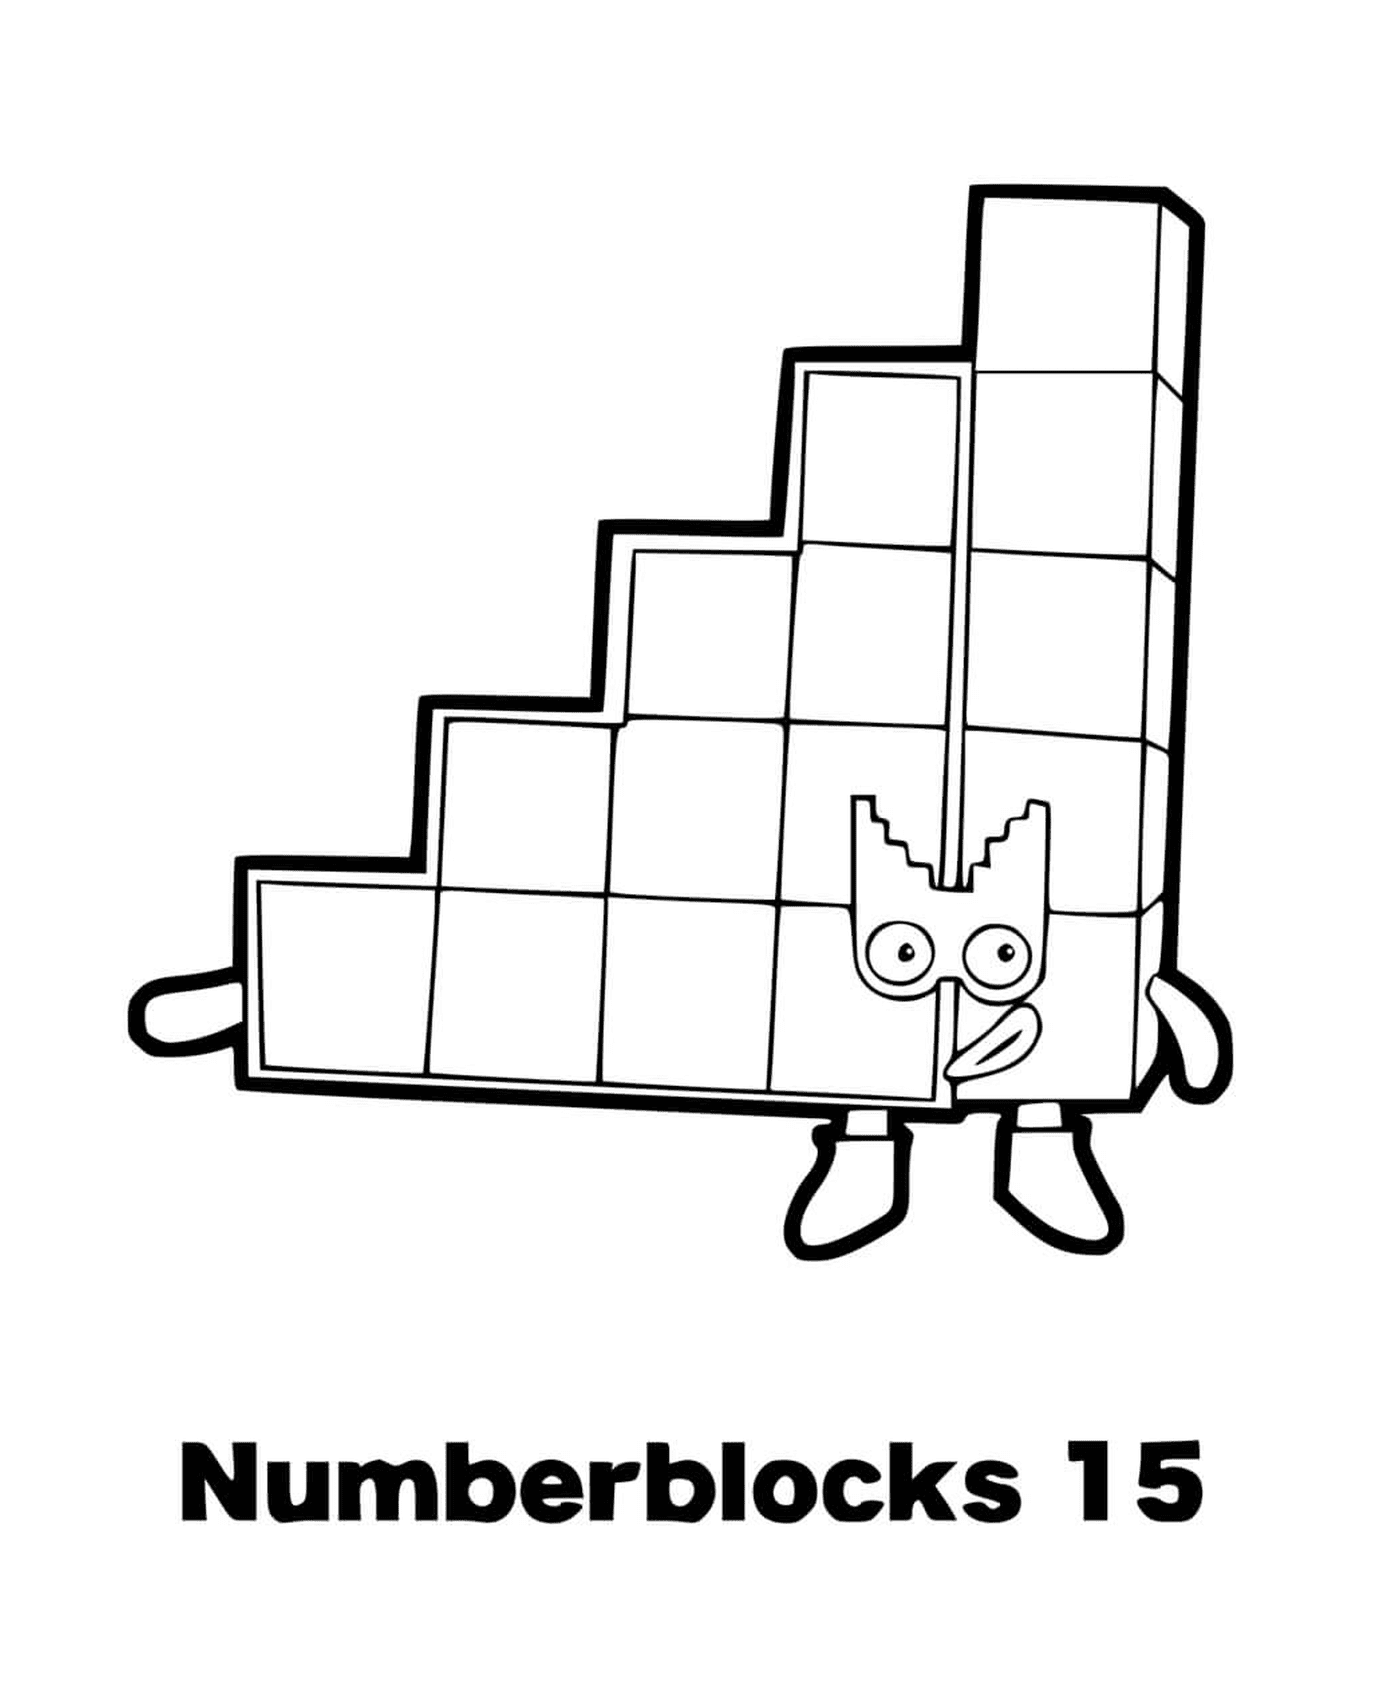  Numberblocks número 15, personagem animado 